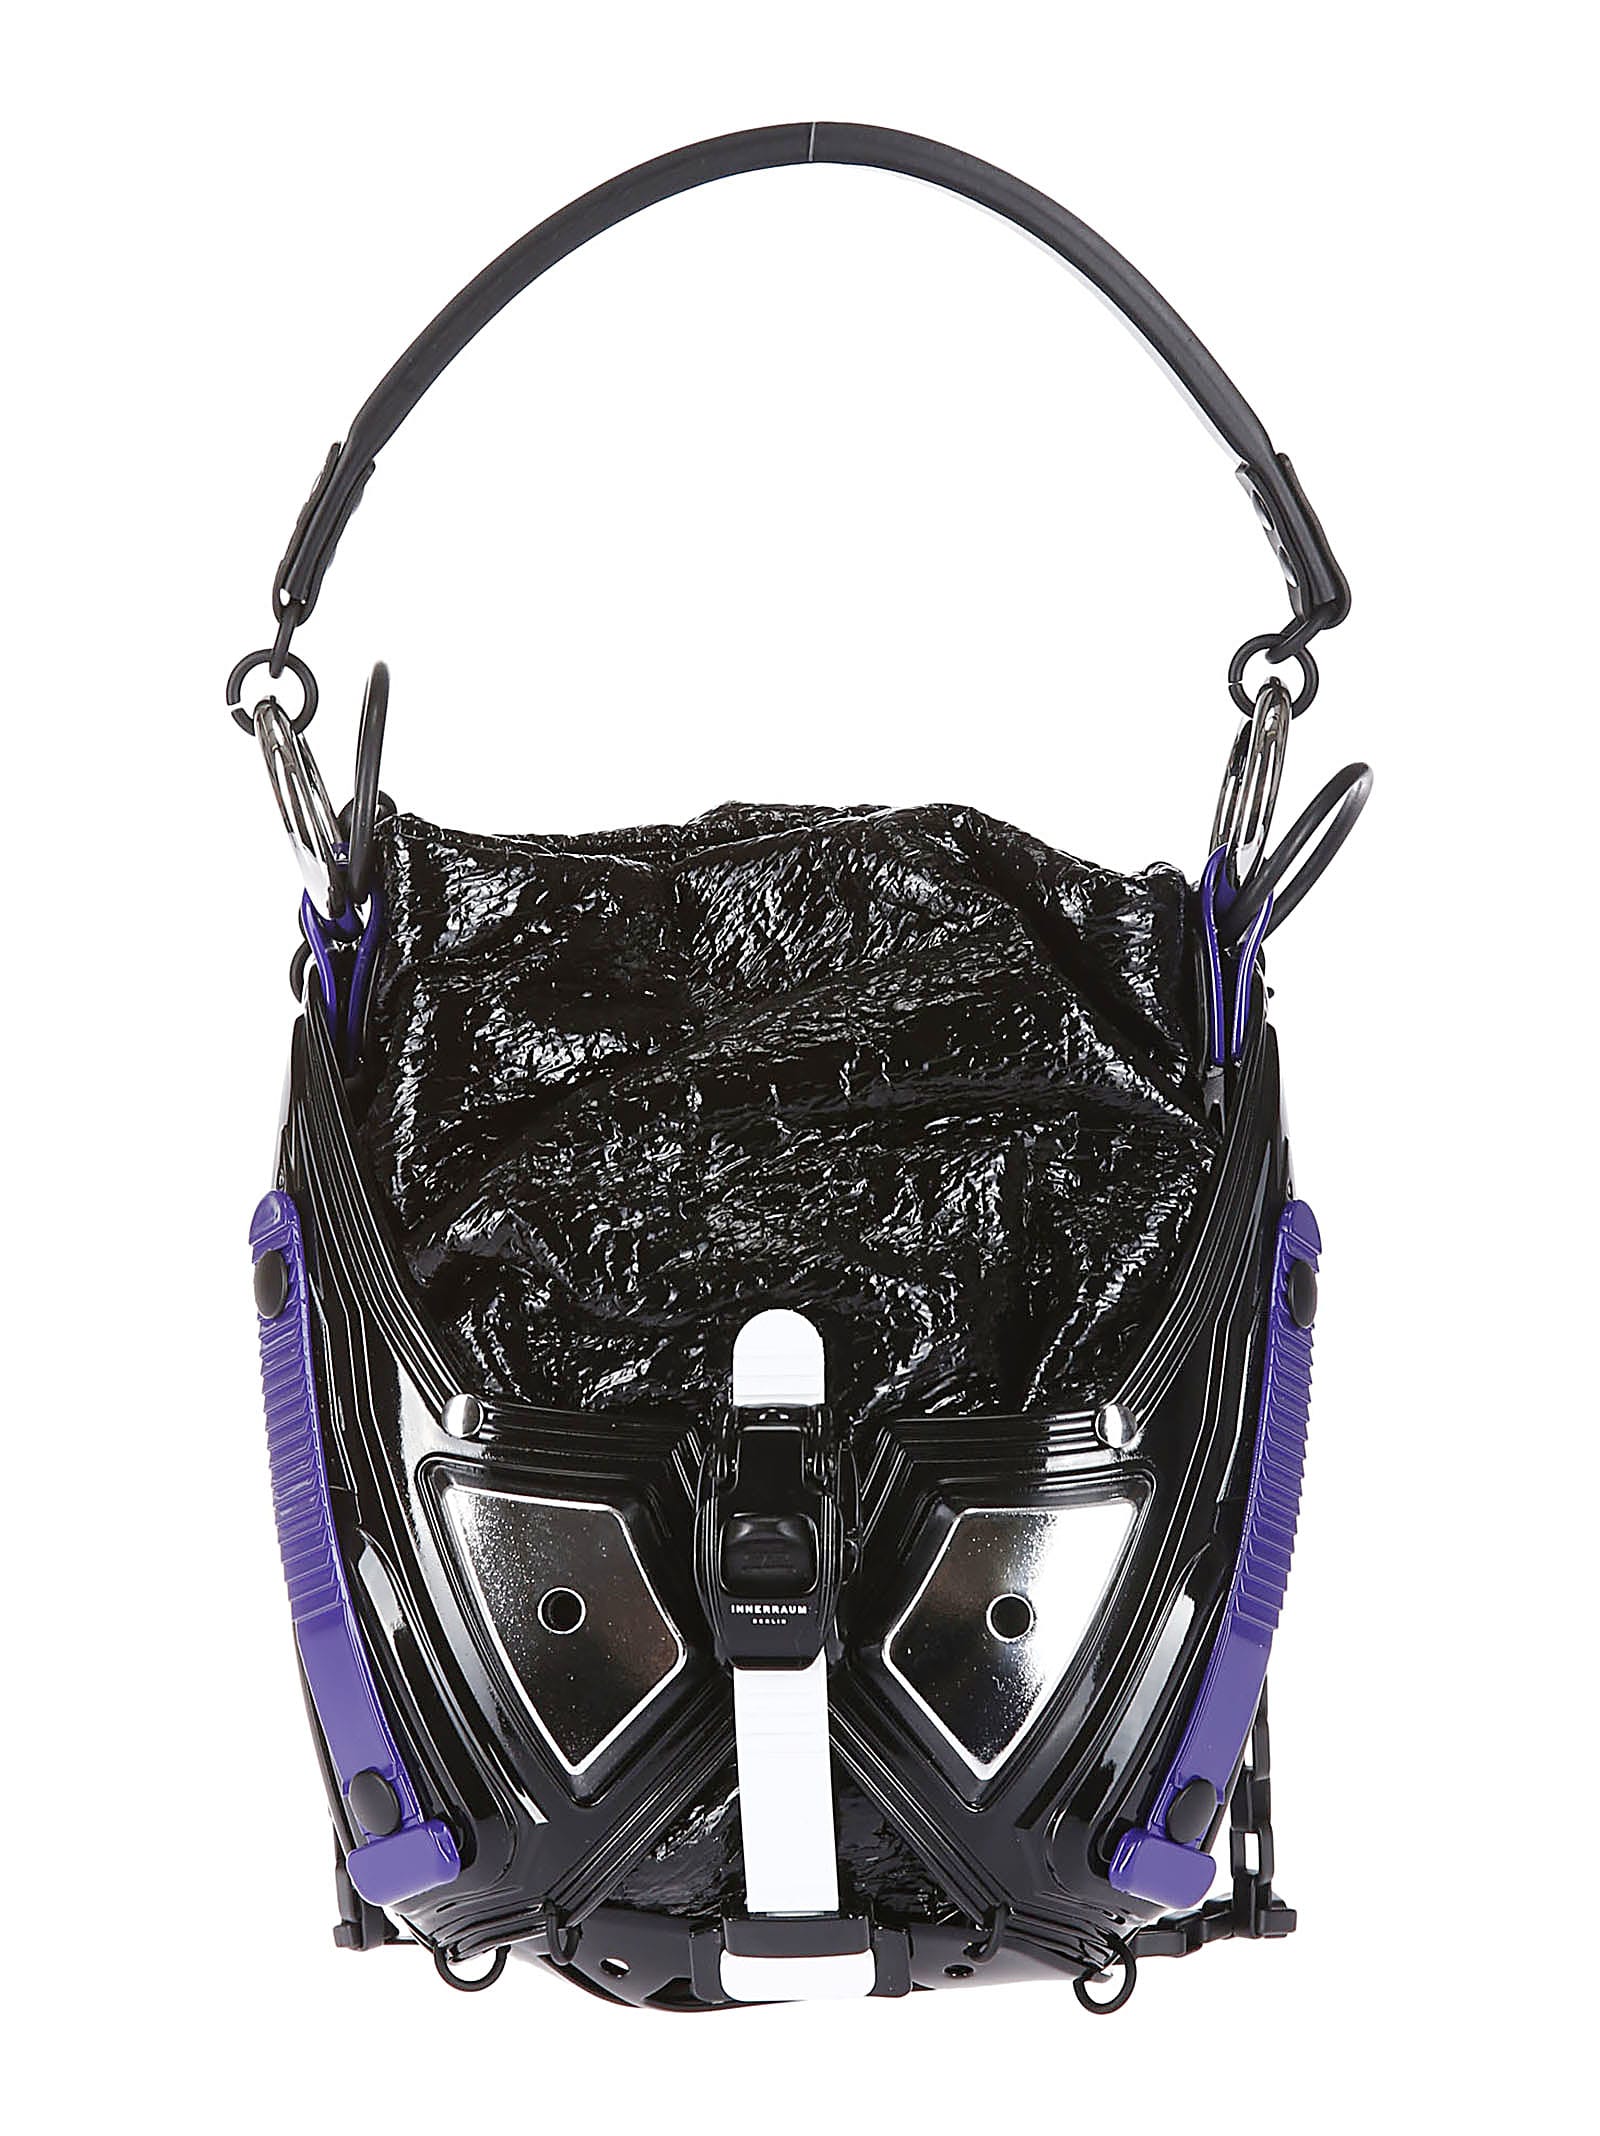 Innerraum Module 01 Handbag With Chain In Blackmix